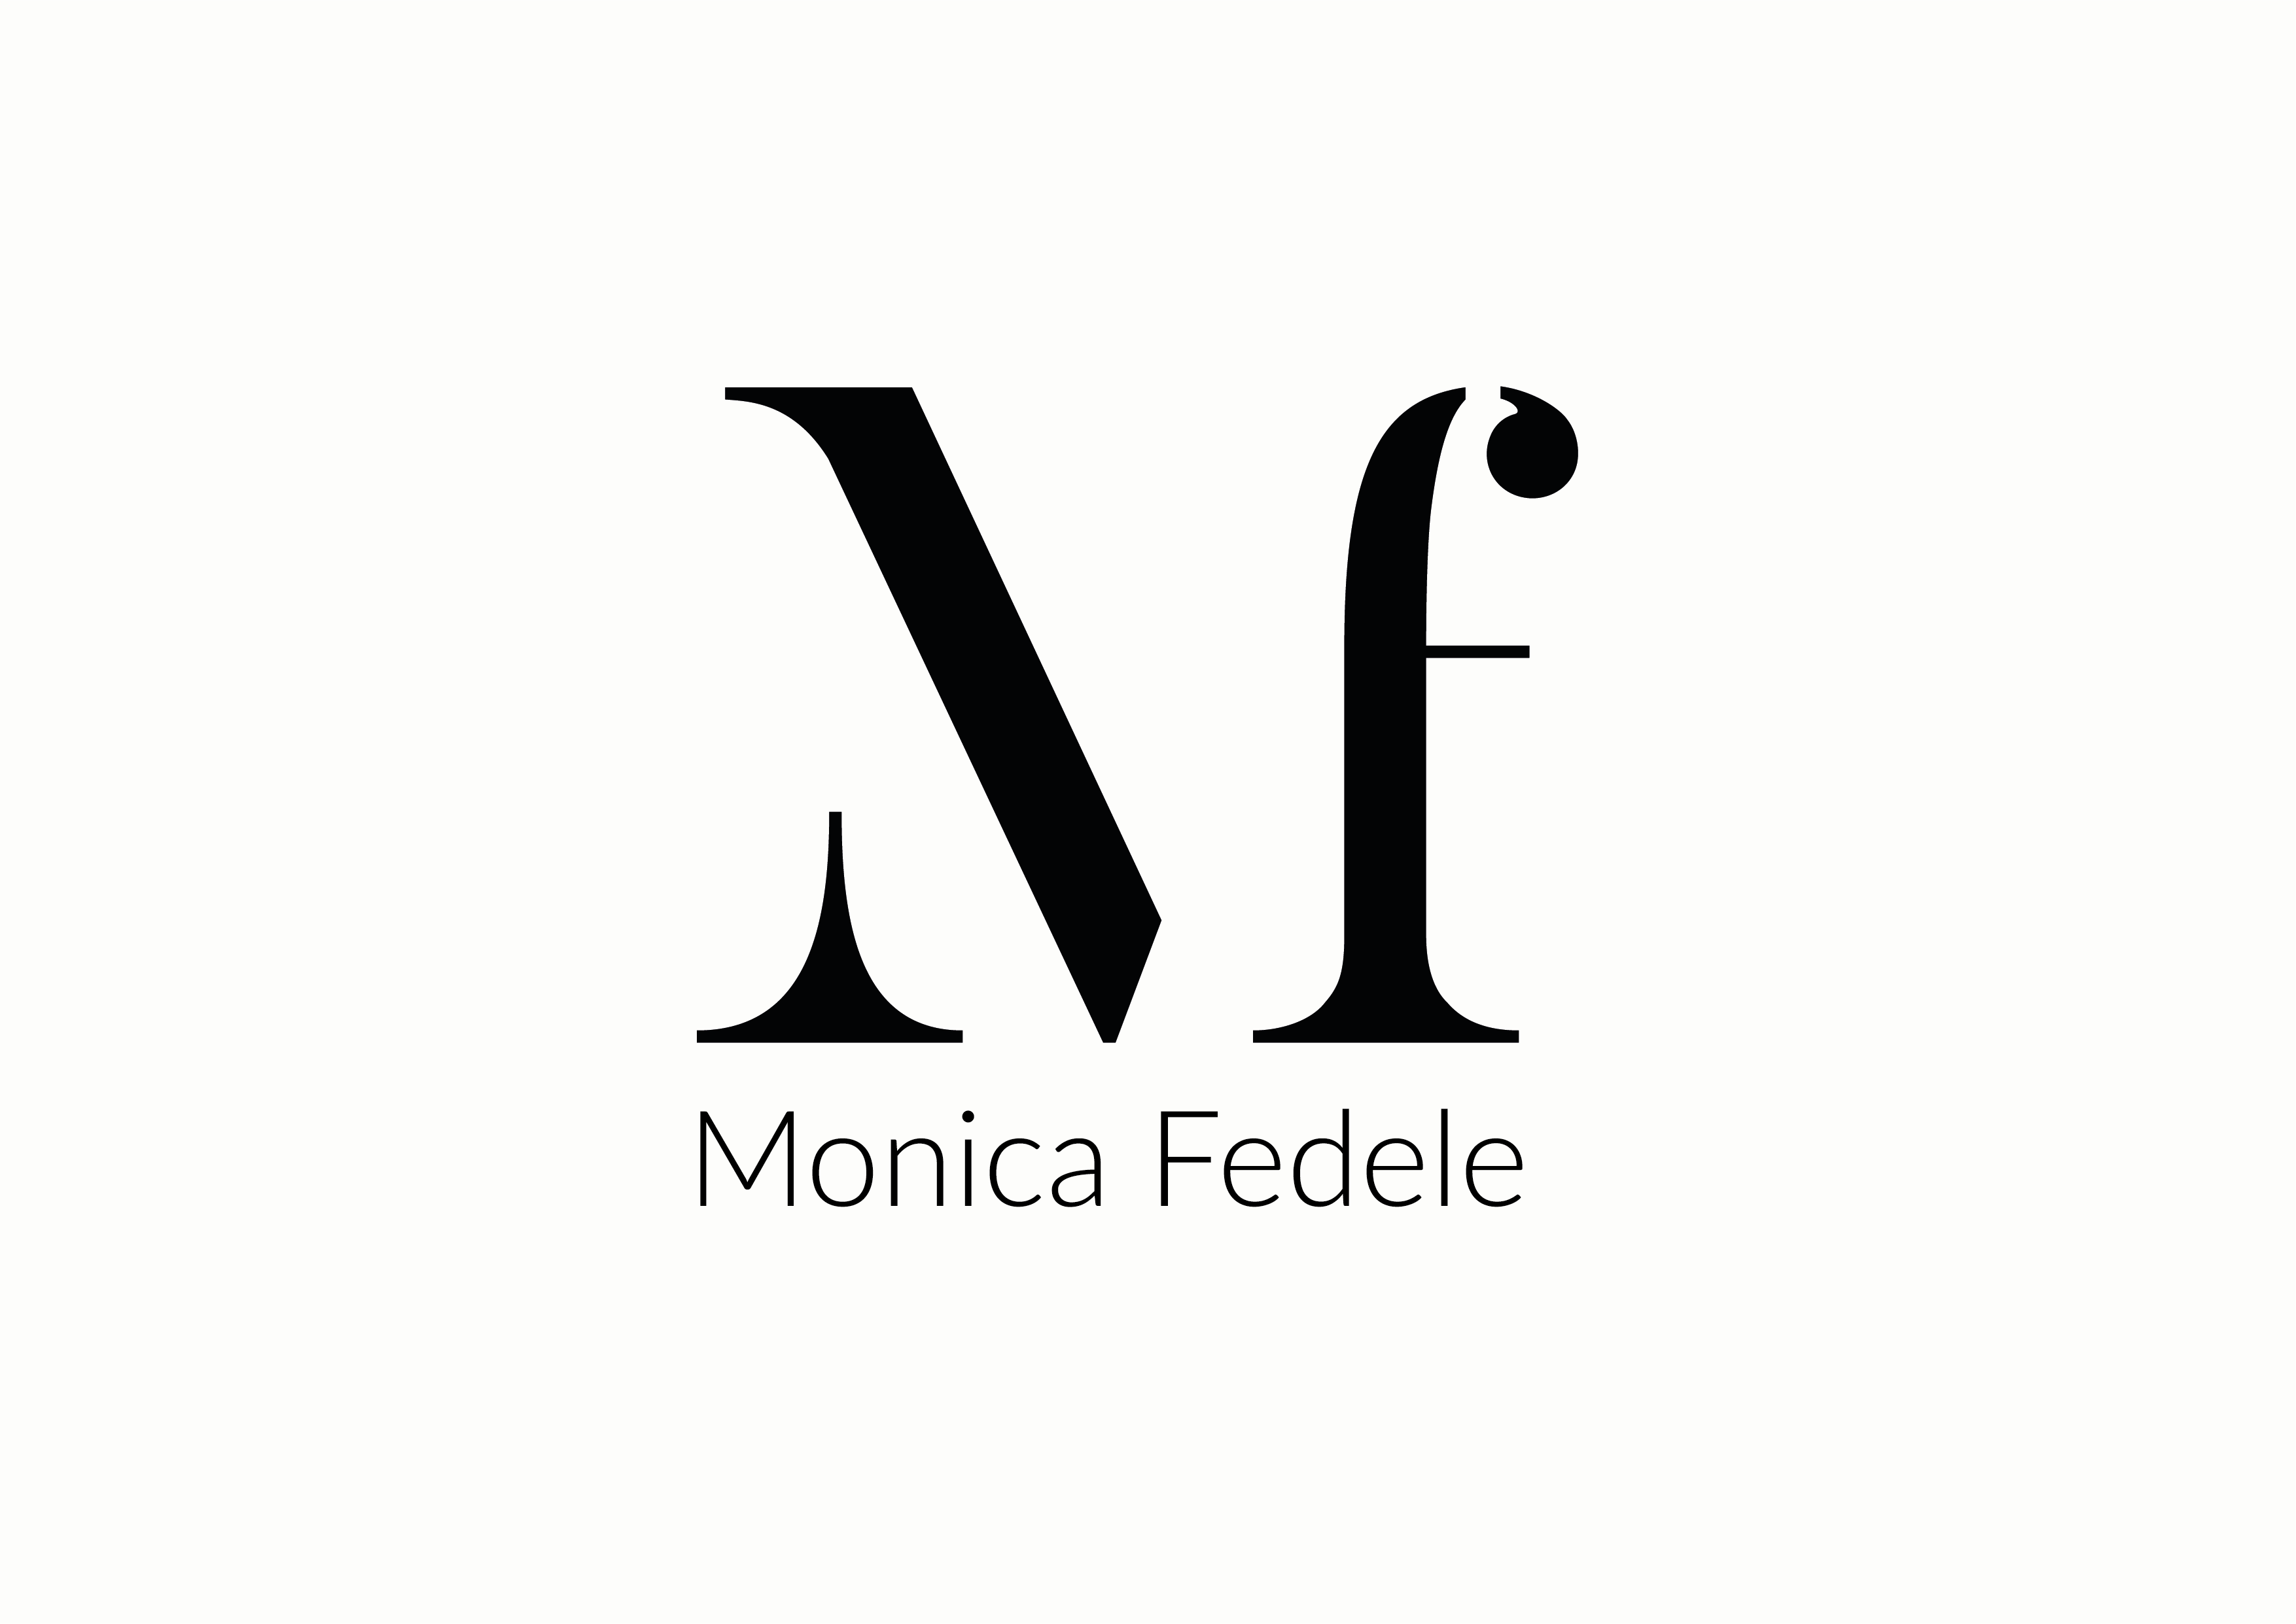 Mf logo design, mf logo monica fedele.